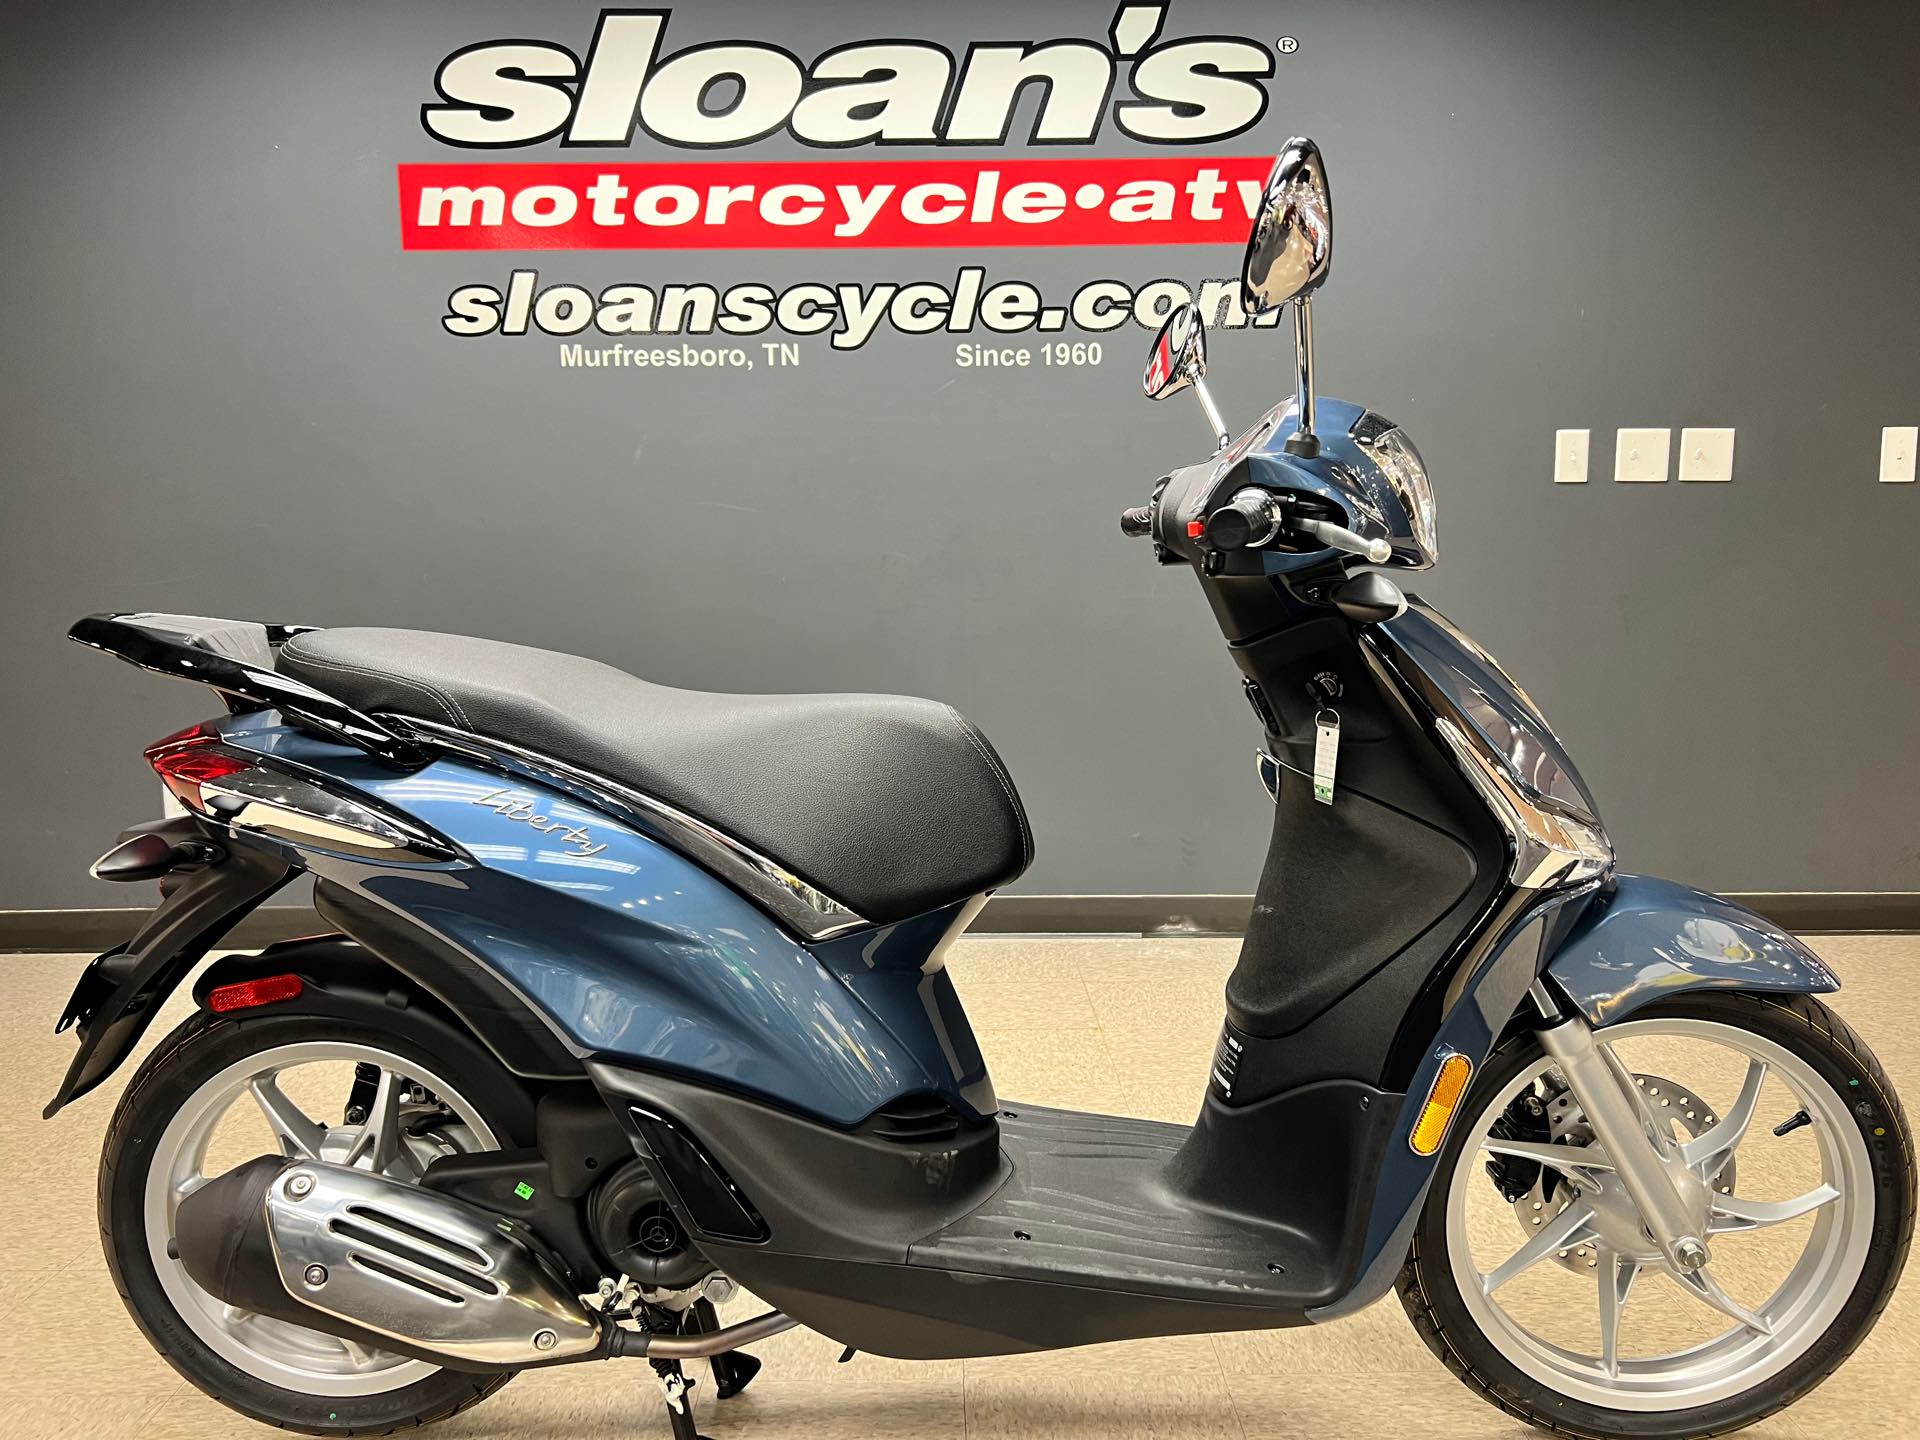 2022 Piaggio Liberty 50 at Sloans Motorcycle ATV, Murfreesboro, TN, 37129